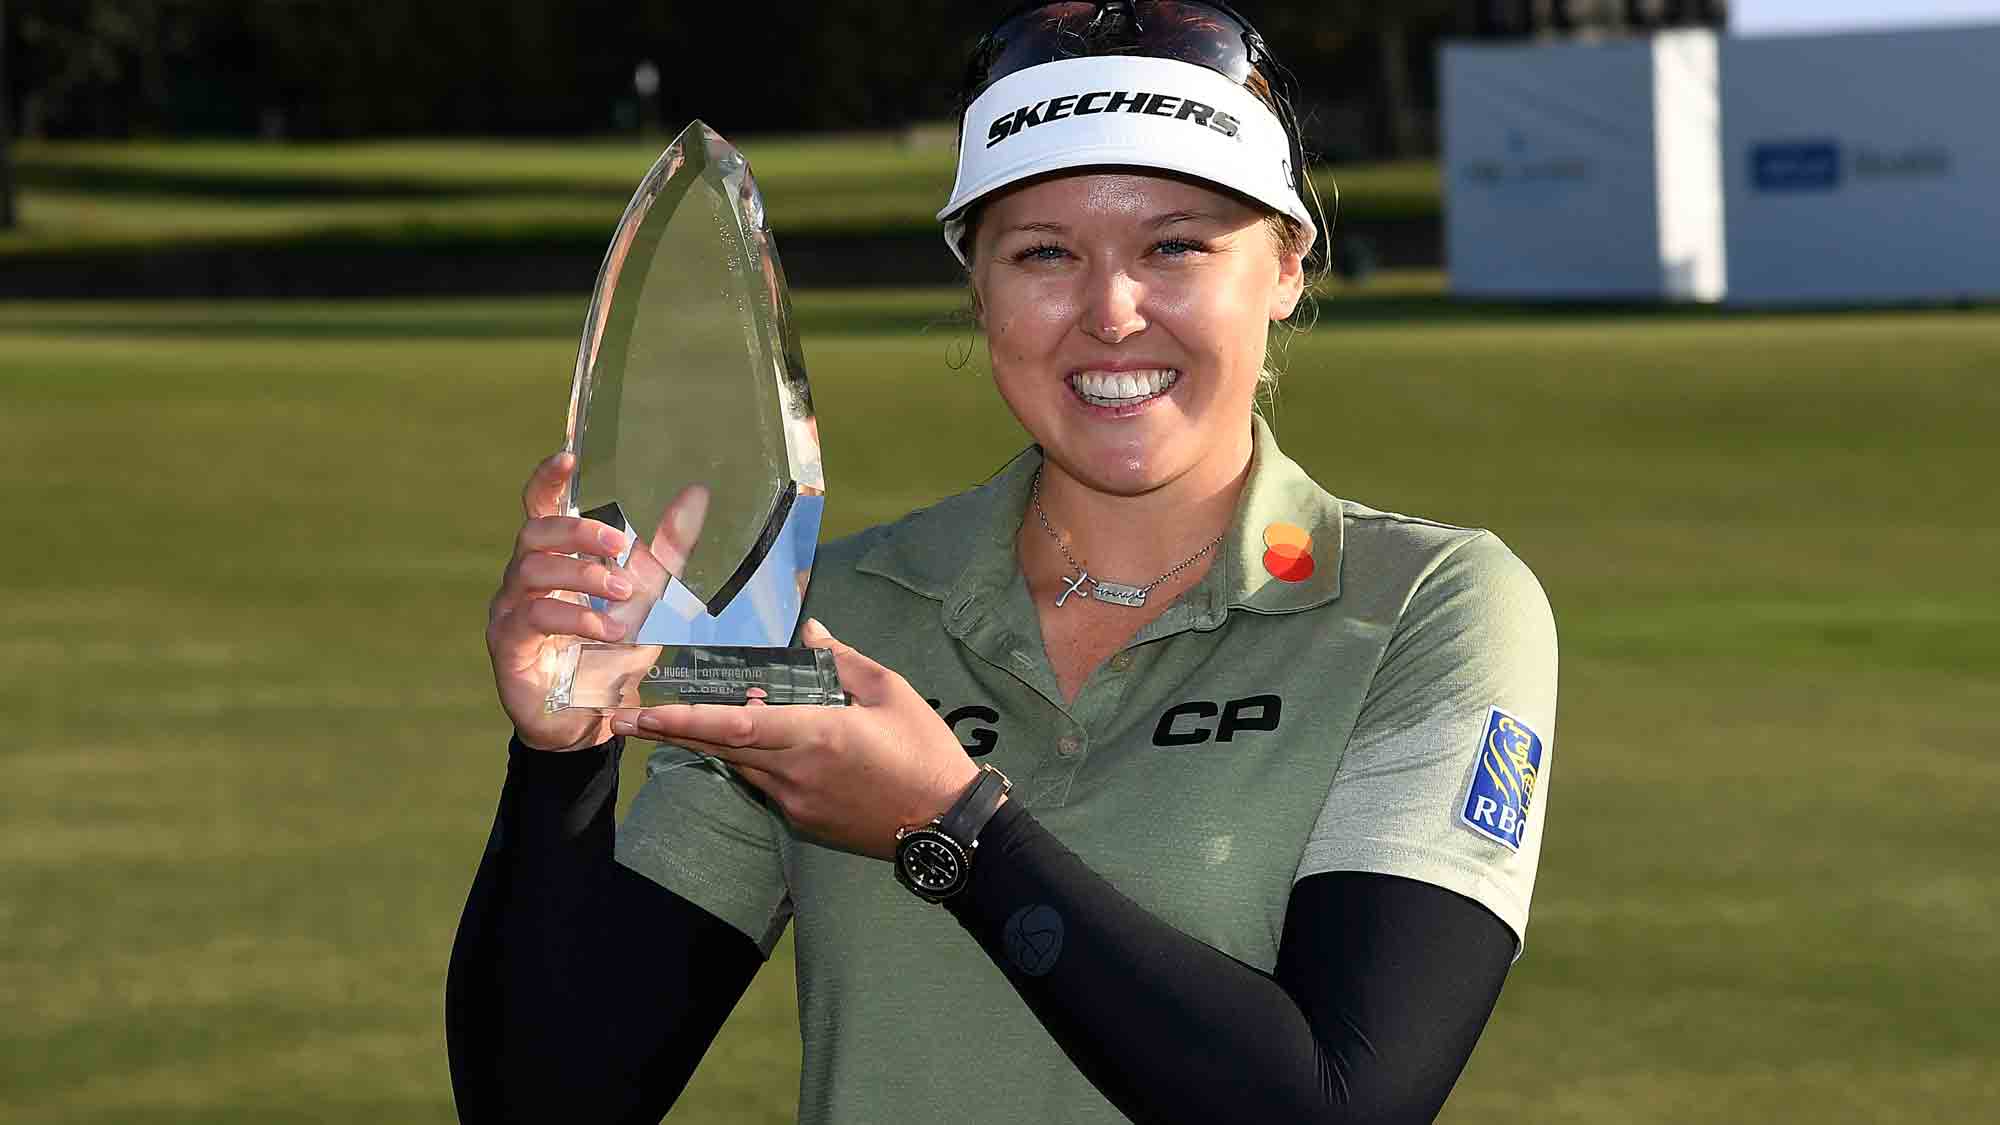 Brooke Henderson wins HUGEL-AIR PREMIA LA Open for 10th LPGA Tour title ...